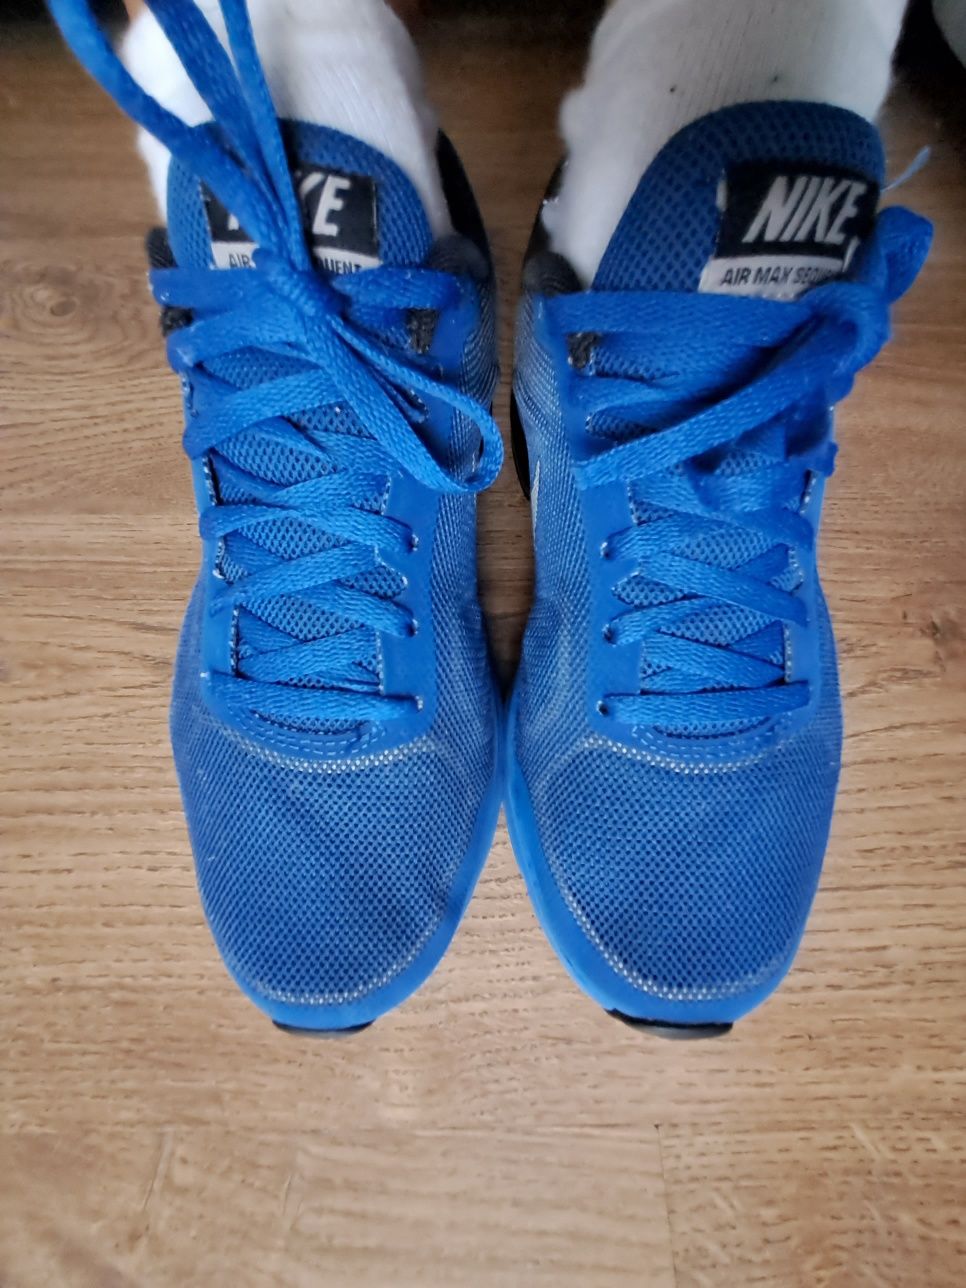 Buty Nike airmax r.36,5